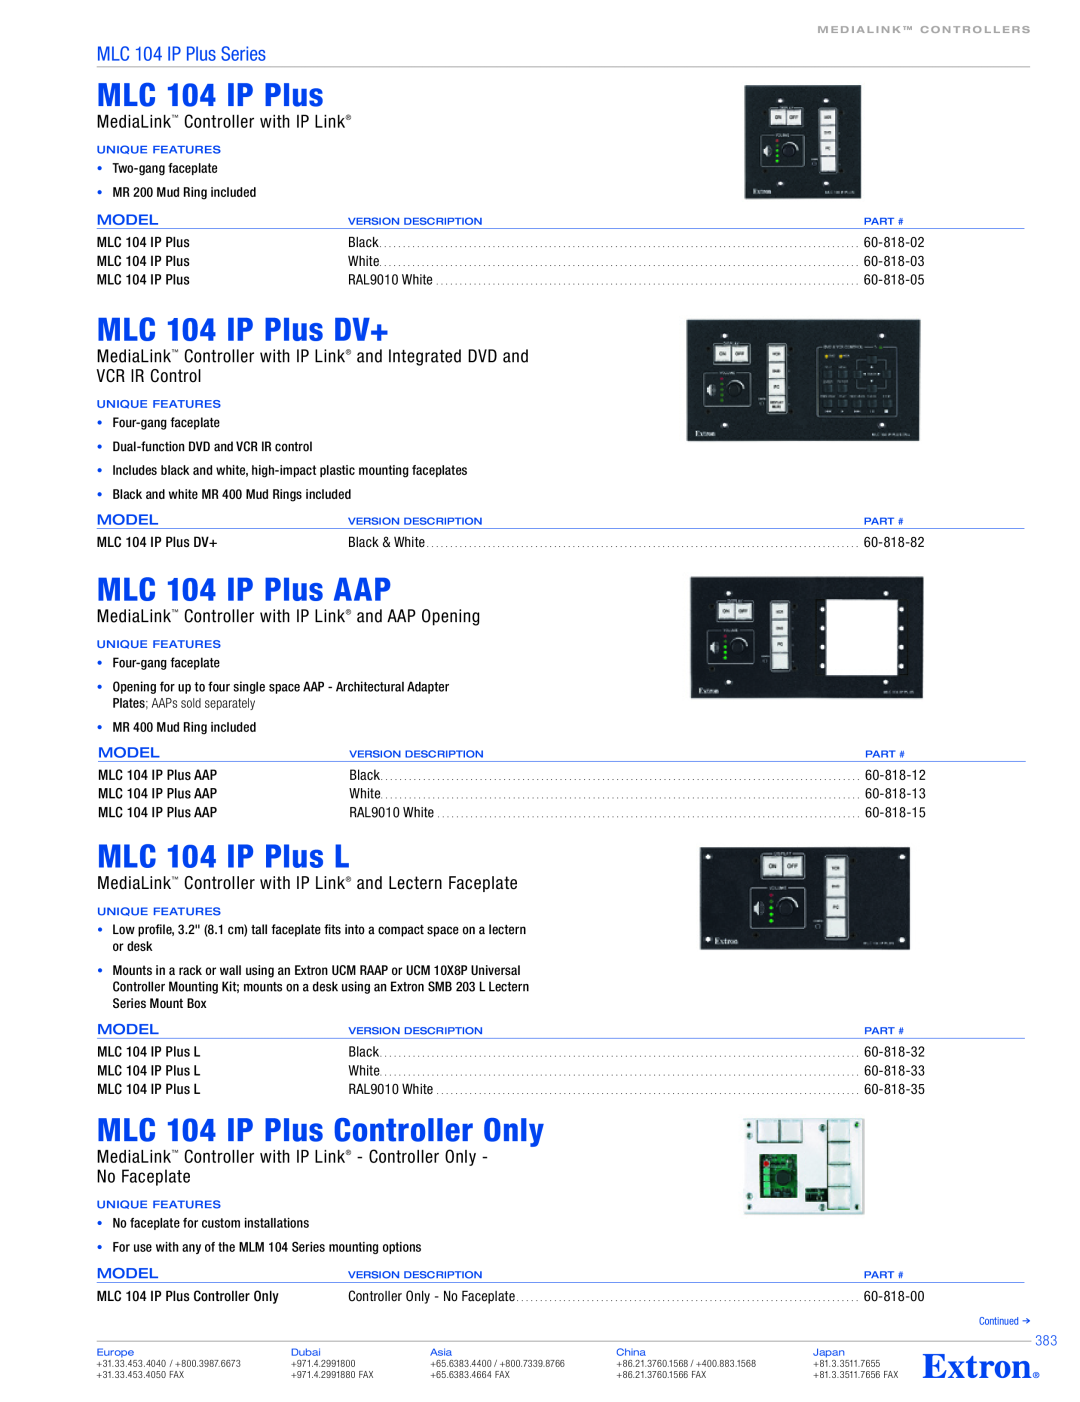 Extron electronic MLC 104 IP PLUS MLC 104 IP Plus DV+, MLC 104 IP Plus AAP, MLC 104 IP Plus L, VCR IR Control, Model 